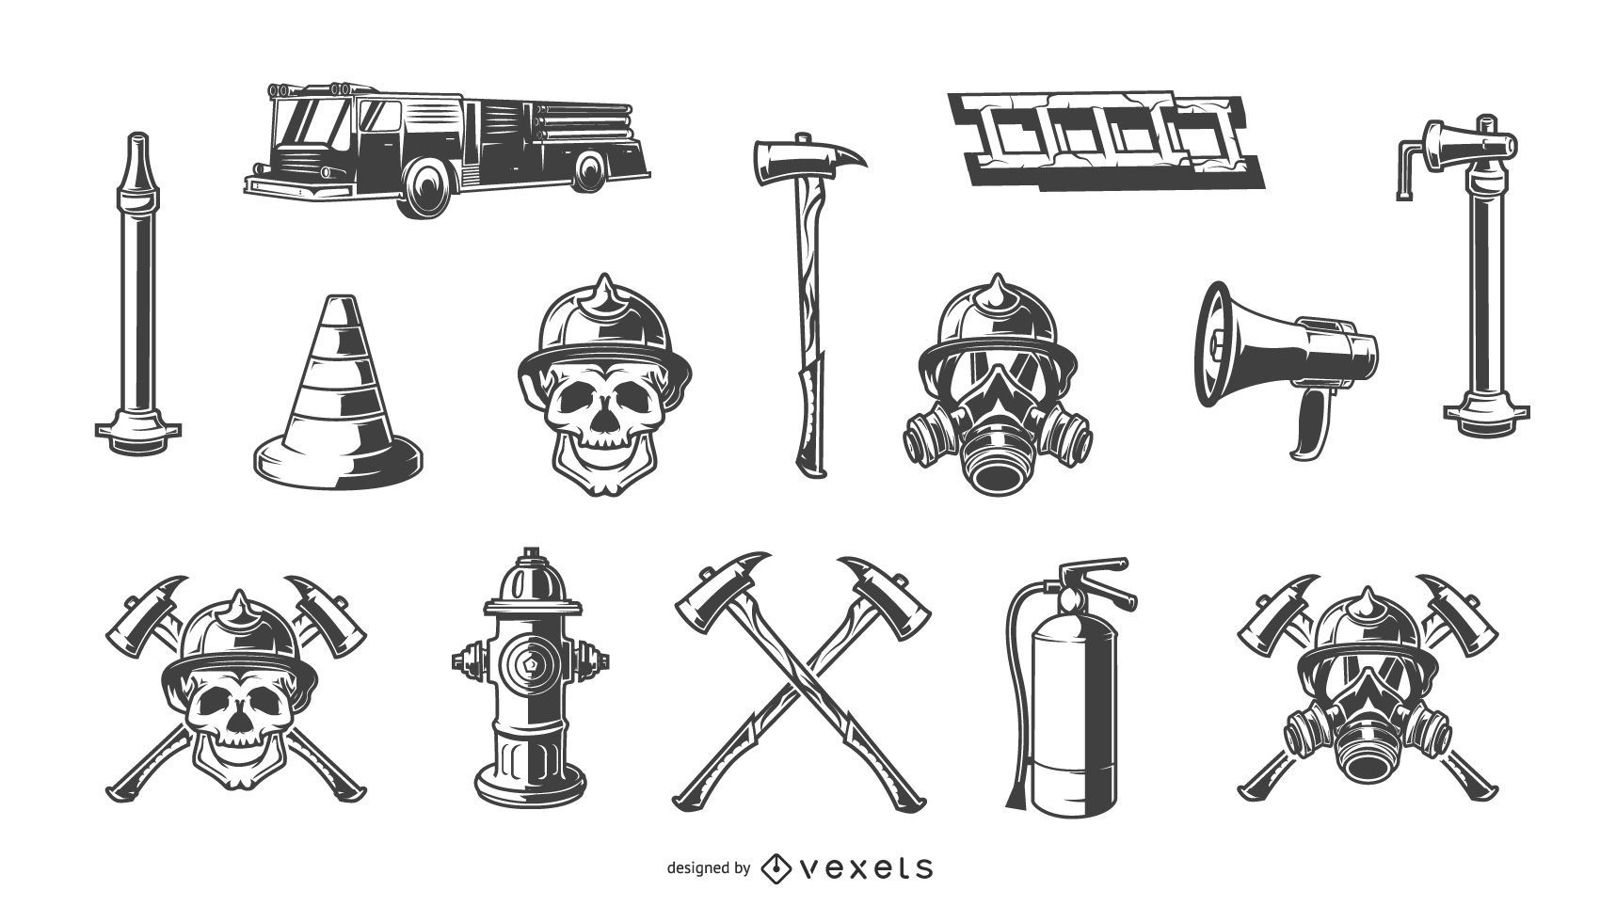 Firefighter hand drawn elements set